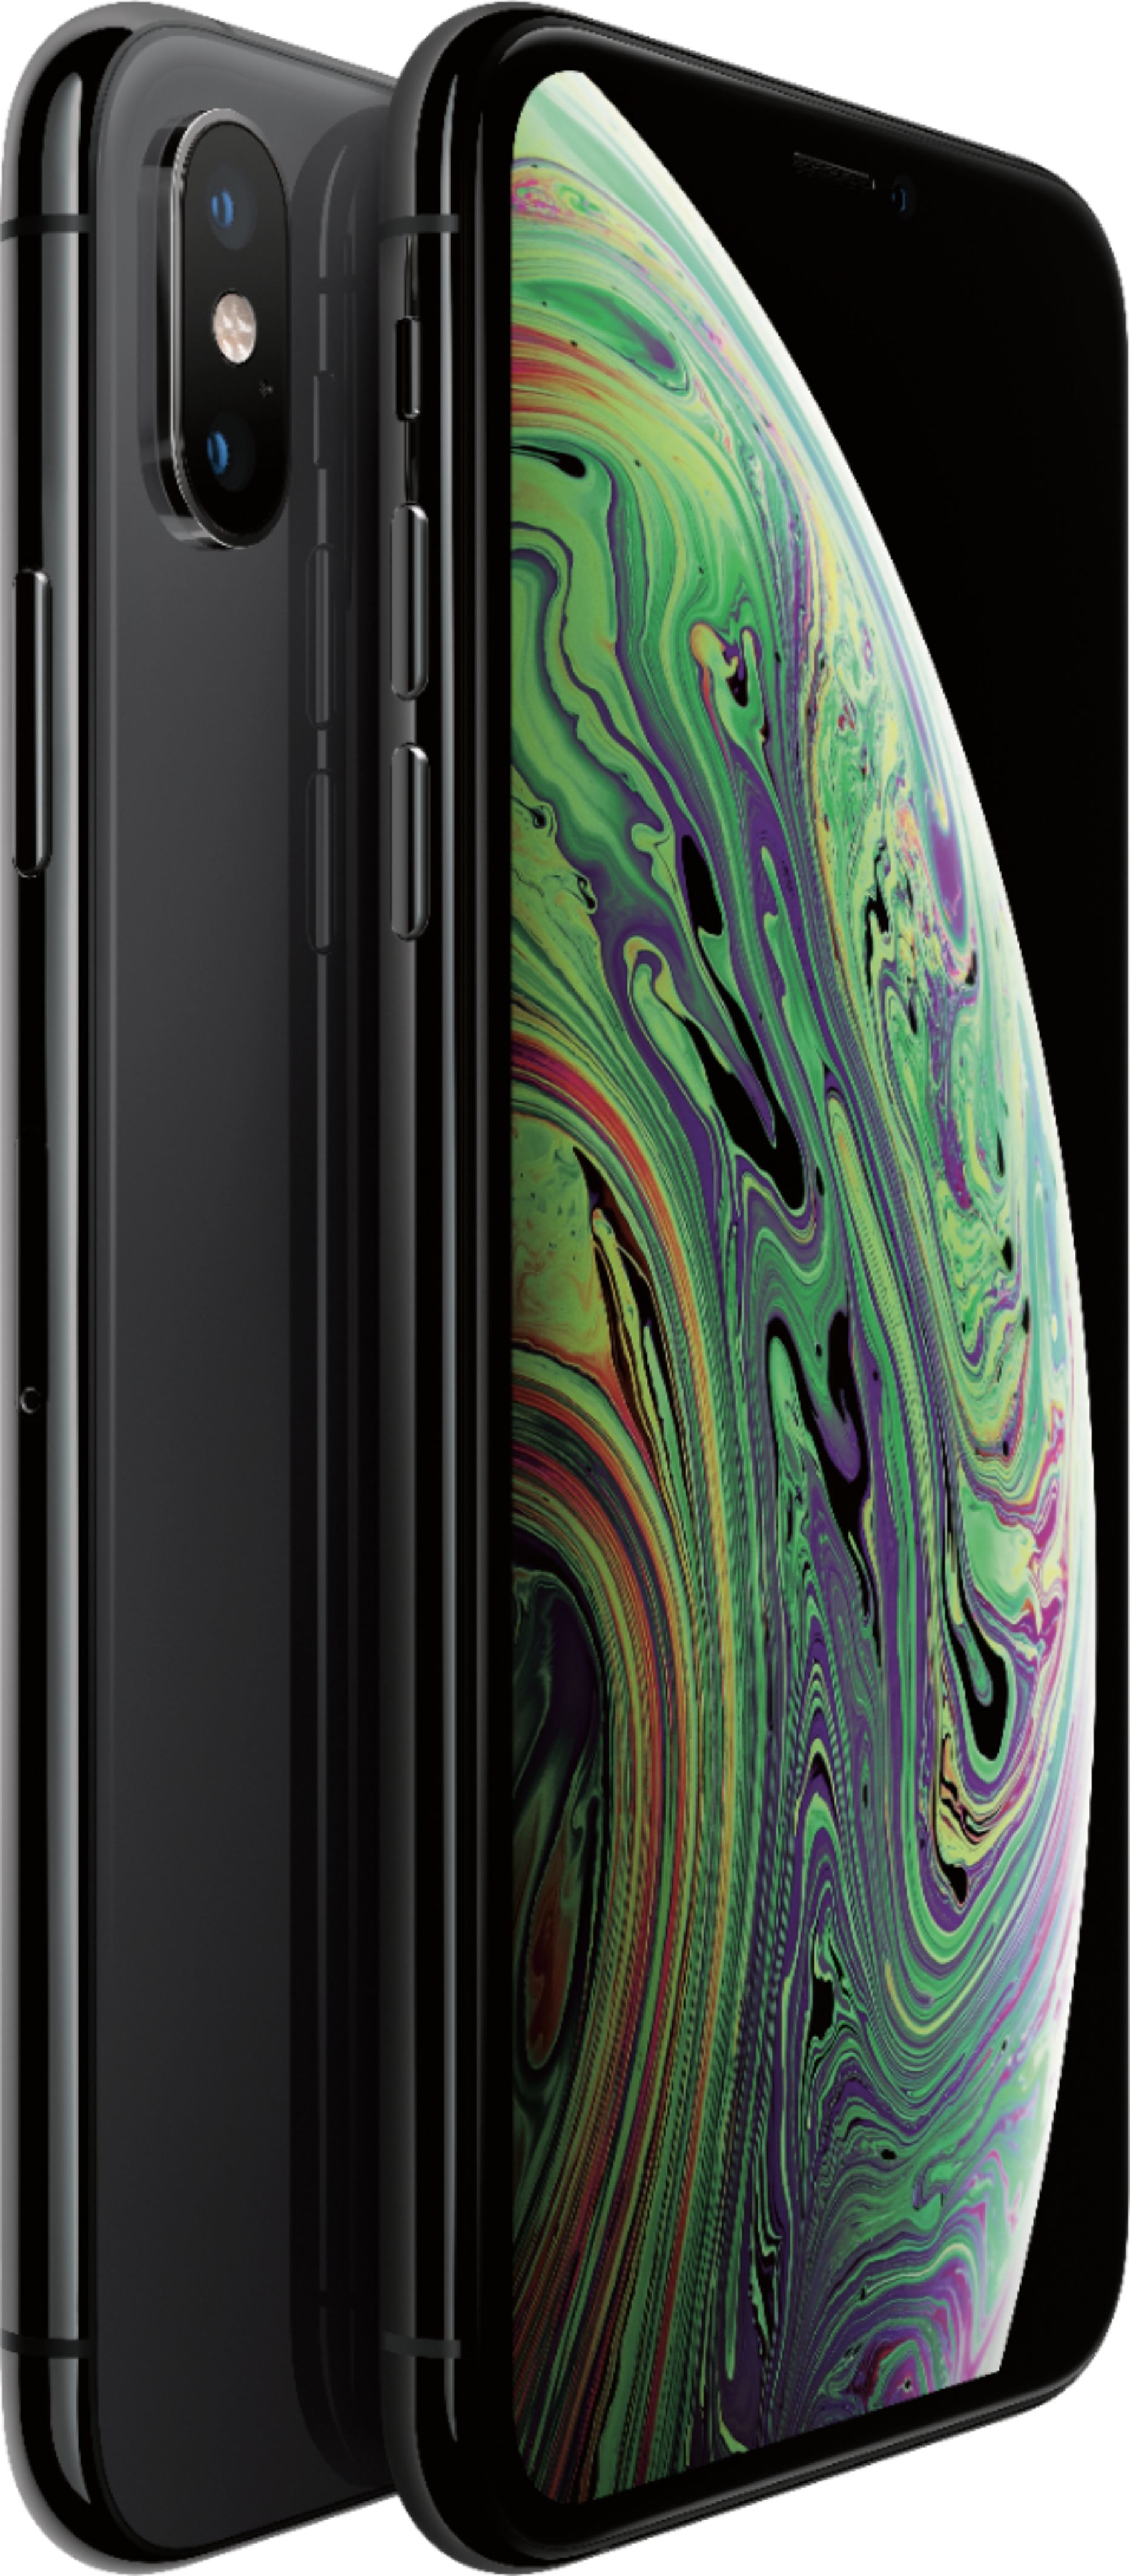 Apple iPhone XS specs - PhoneArena